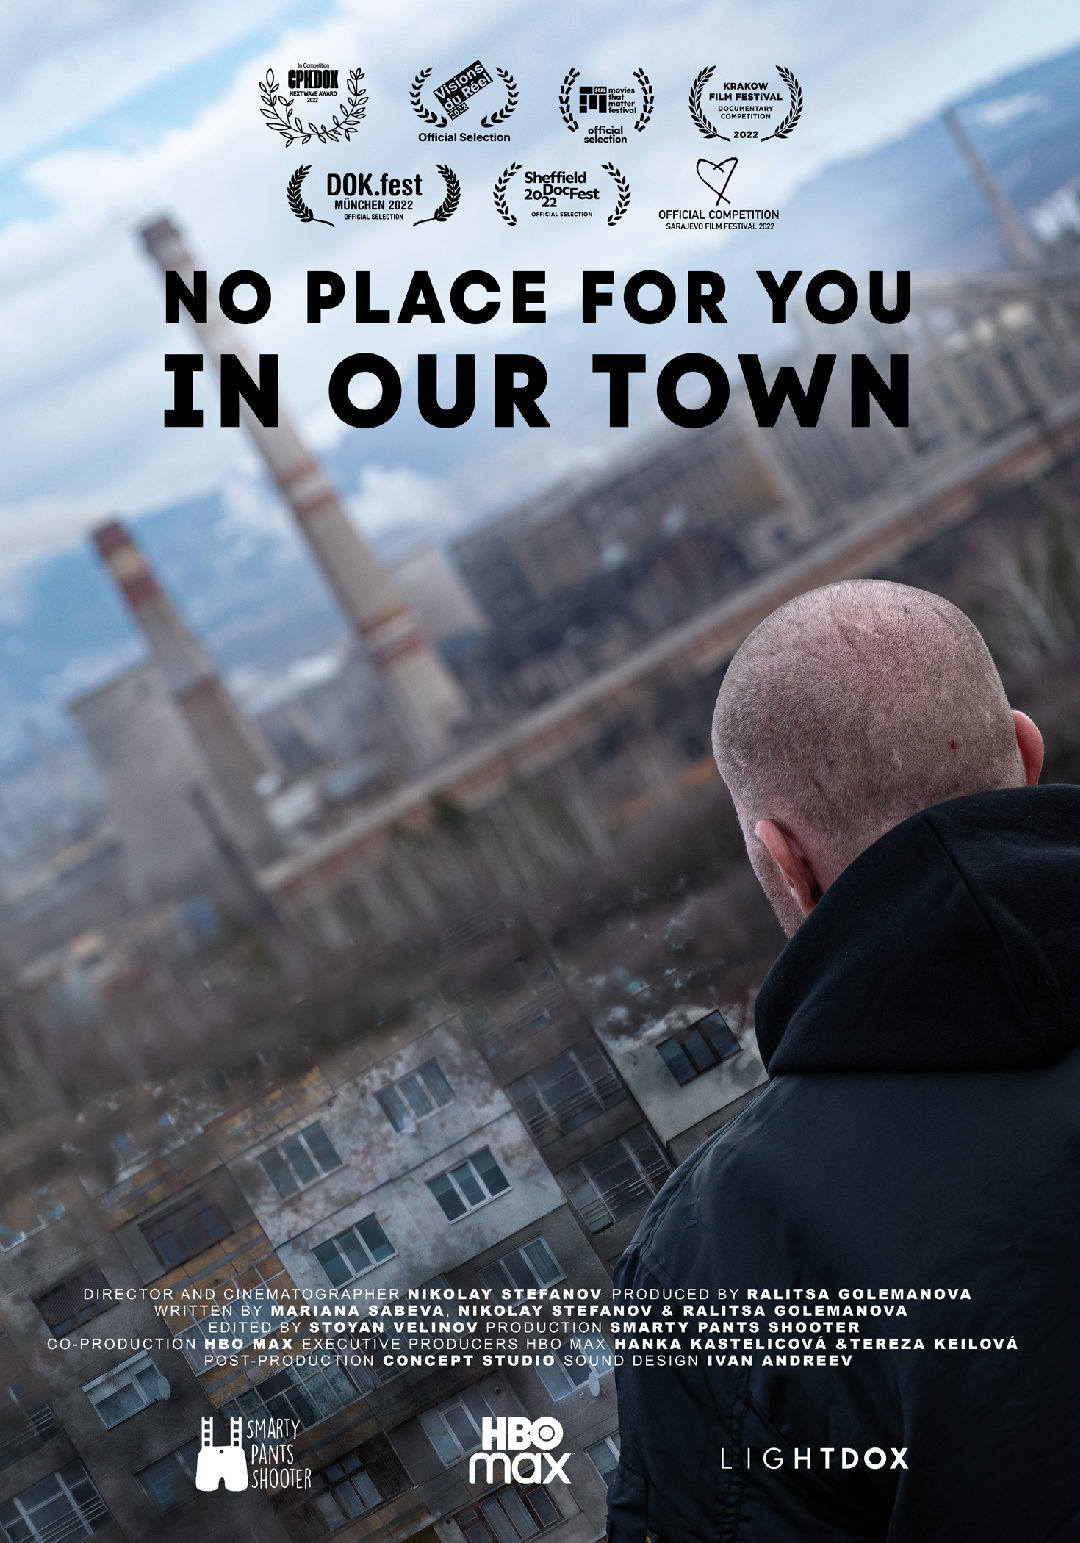 No Place for You in Our Town, Nikolay Stefanov, por sede, 17 docsmx